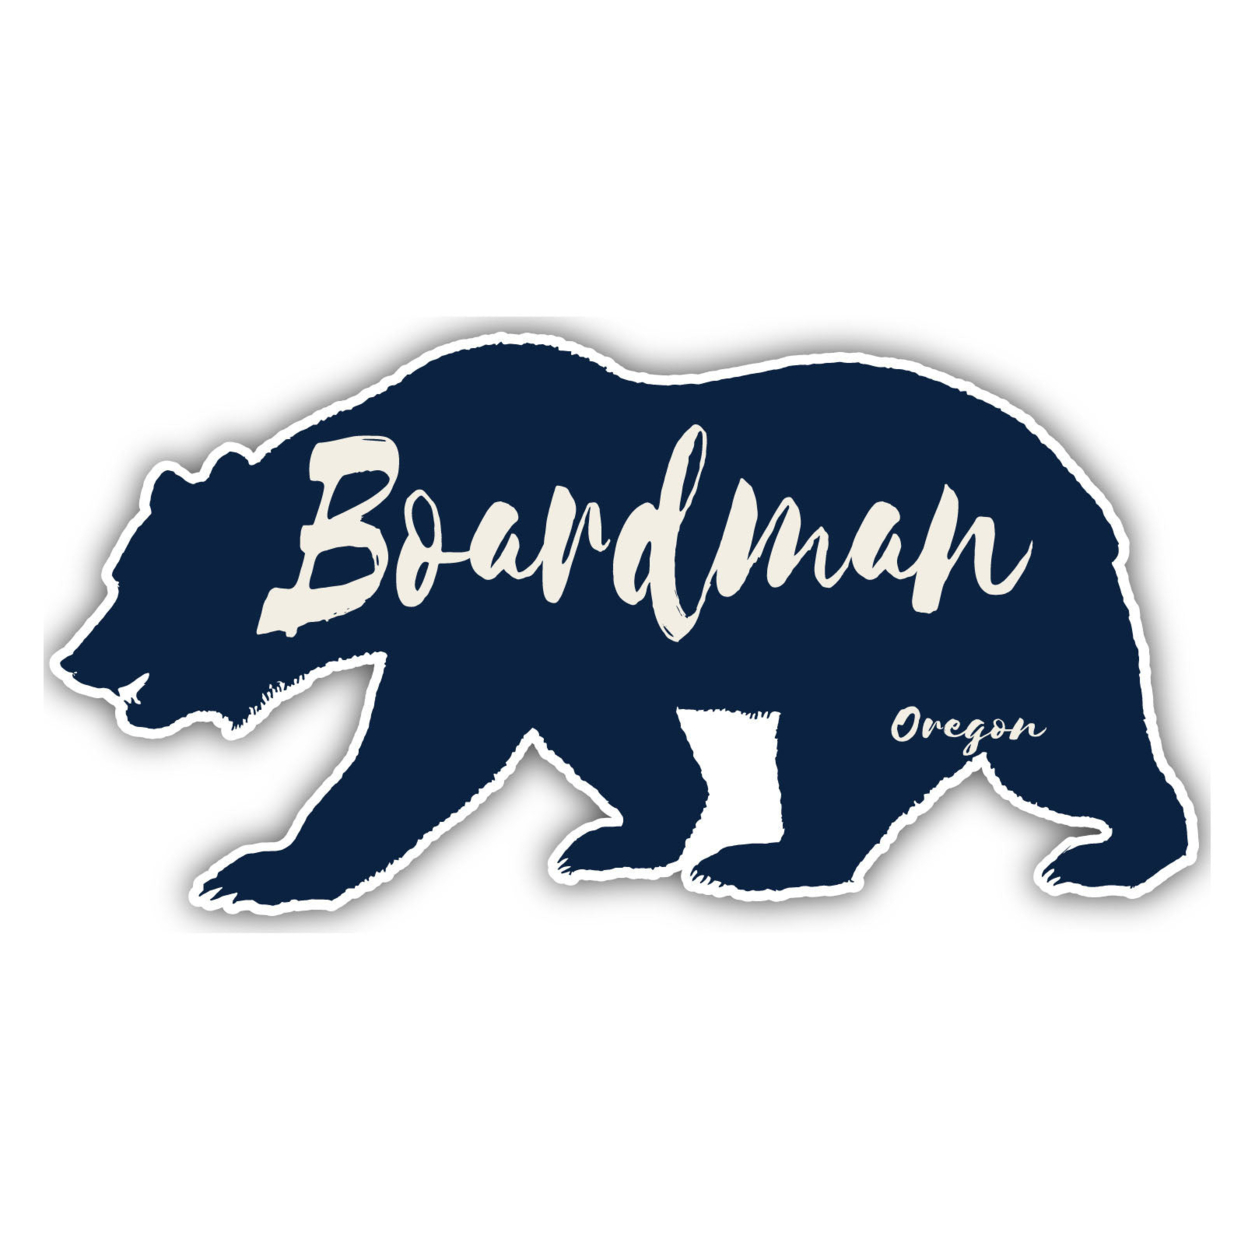 Boardman Oregon Souvenir Decorative Stickers (Choose Theme And Size) - 4-Pack, 8-Inch, Bear